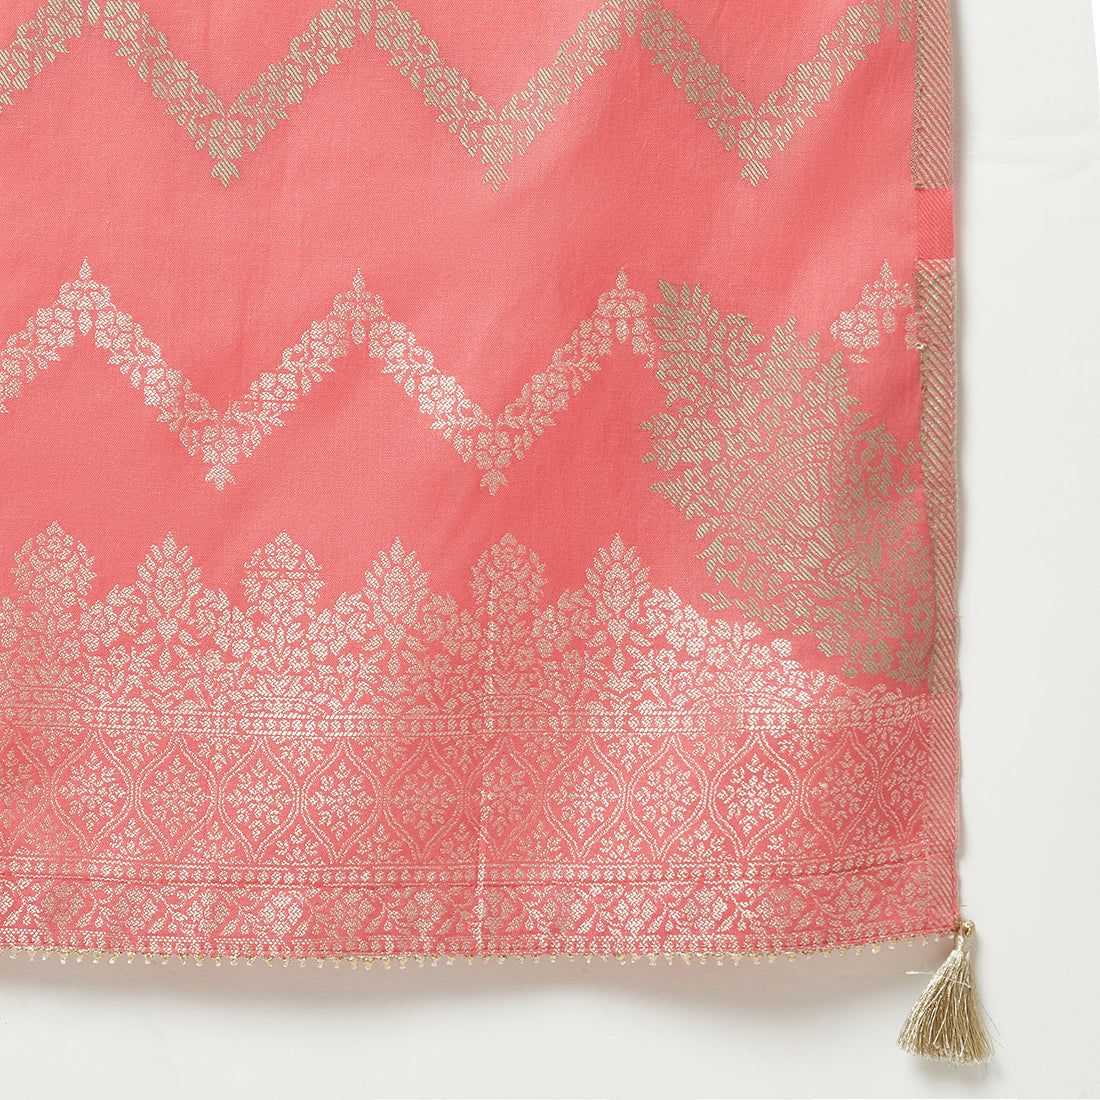 Cotton Woven Chikankari Design Unstitched Dress Material With dupatta